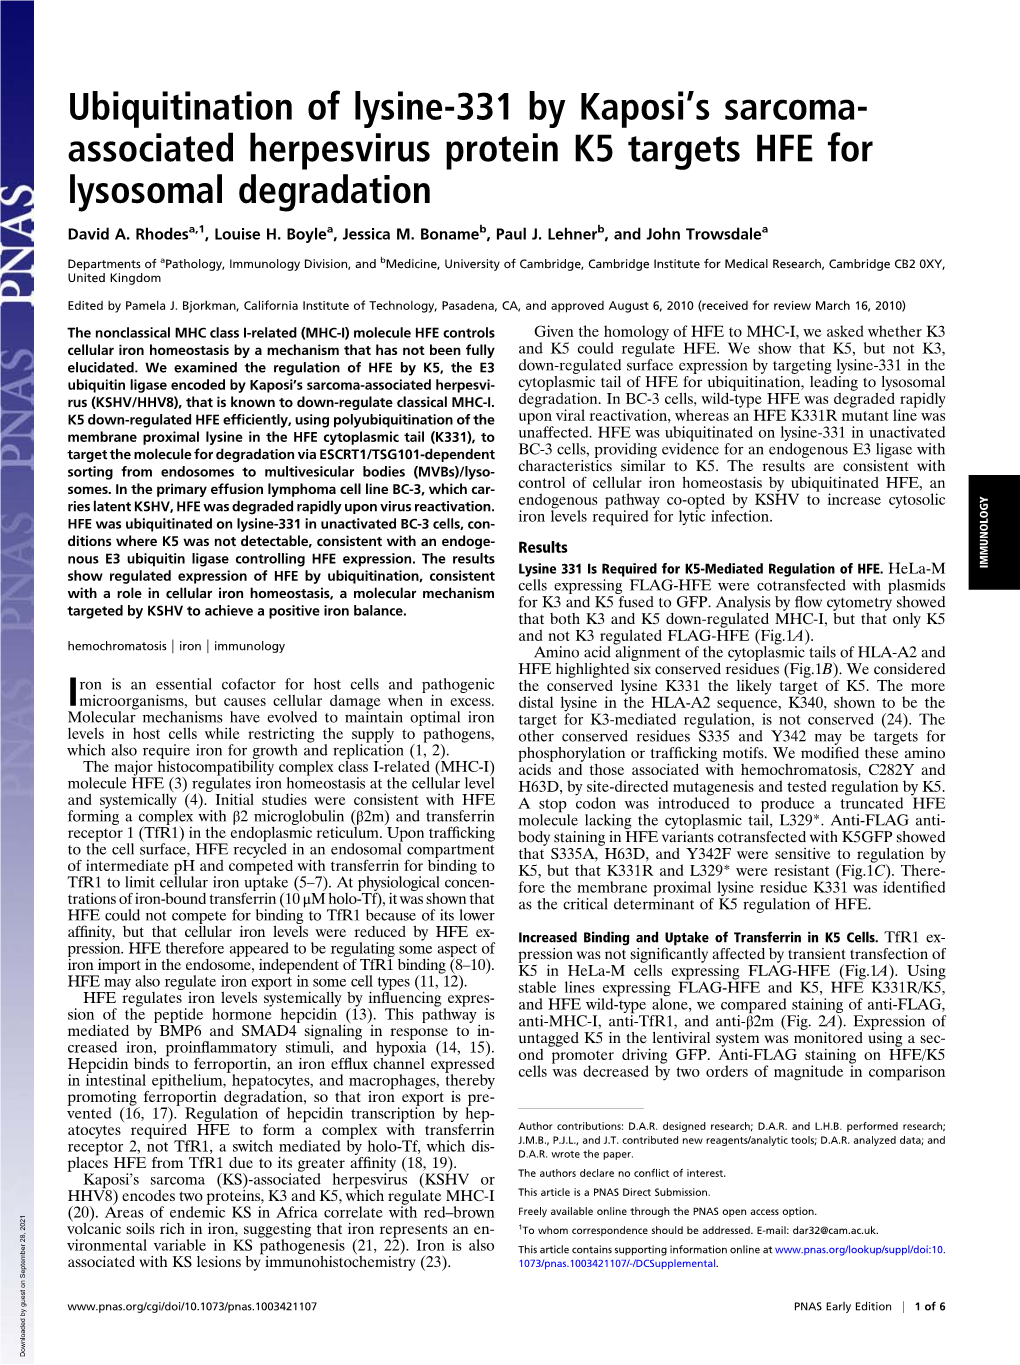 Ubiquitination of Lysine-331 by Kaposits Sarcoma- Associated